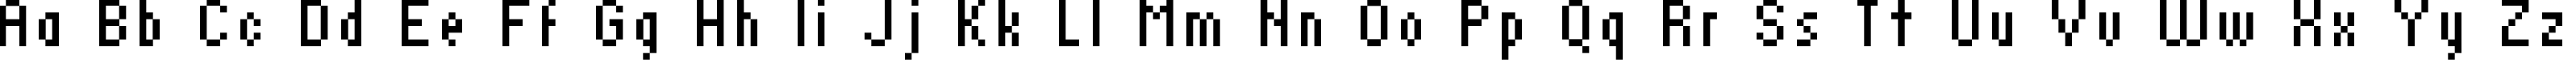 Пример написания английского алфавита шрифтом standard 07_58